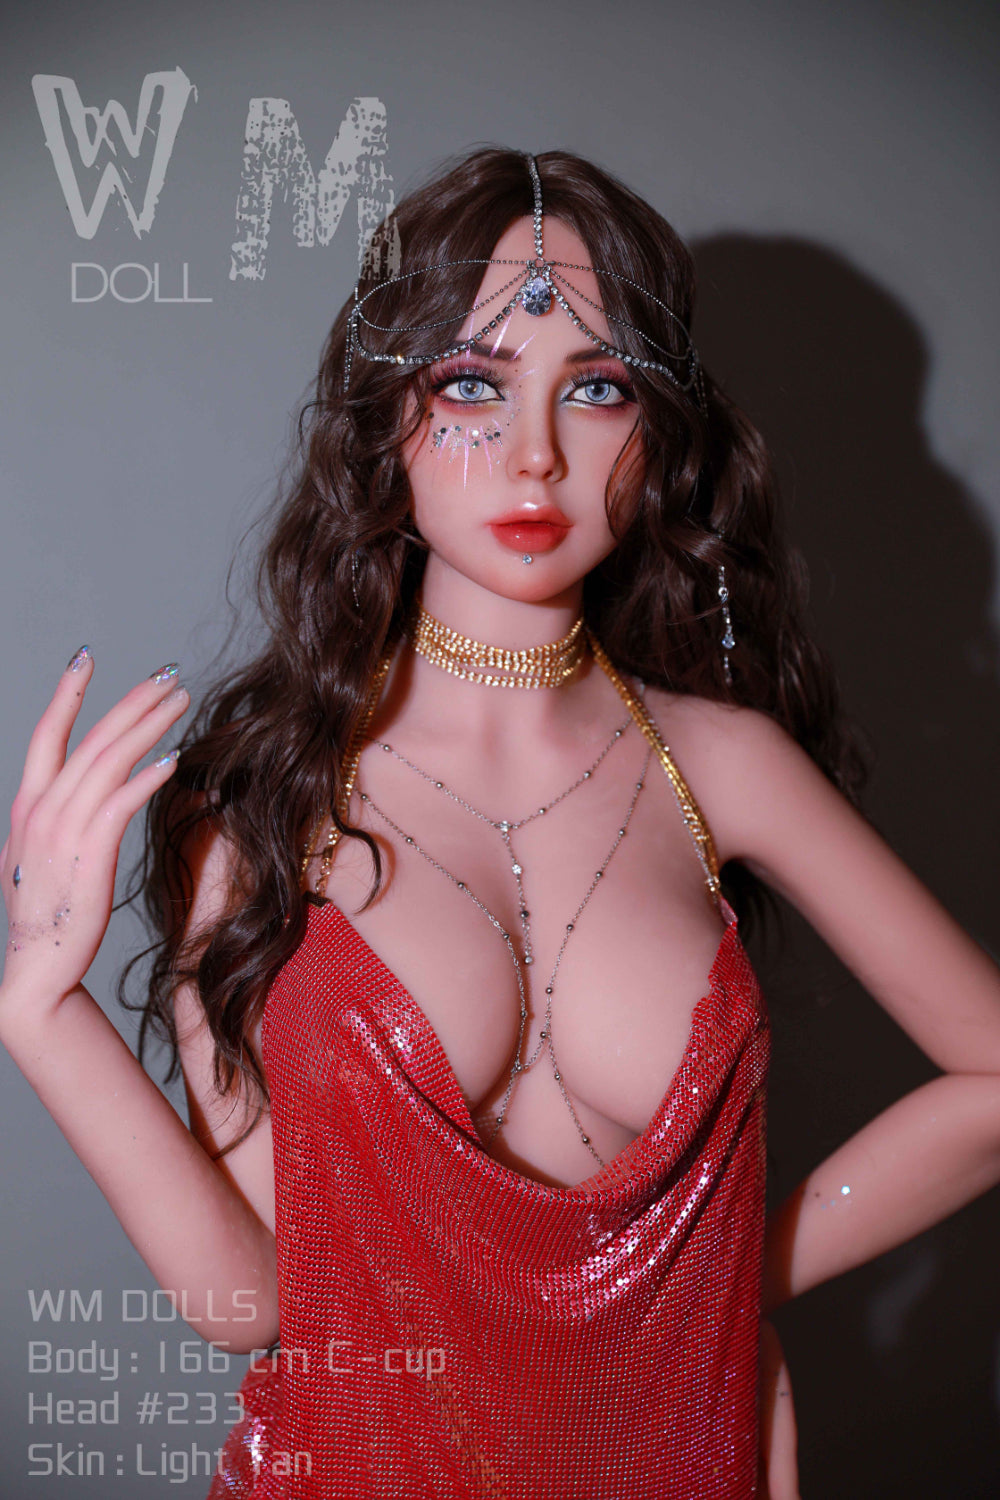 WM DOLL 166 CM C TPE - Avaline | Buy Sex Dolls at DOLLS ACTUALLY